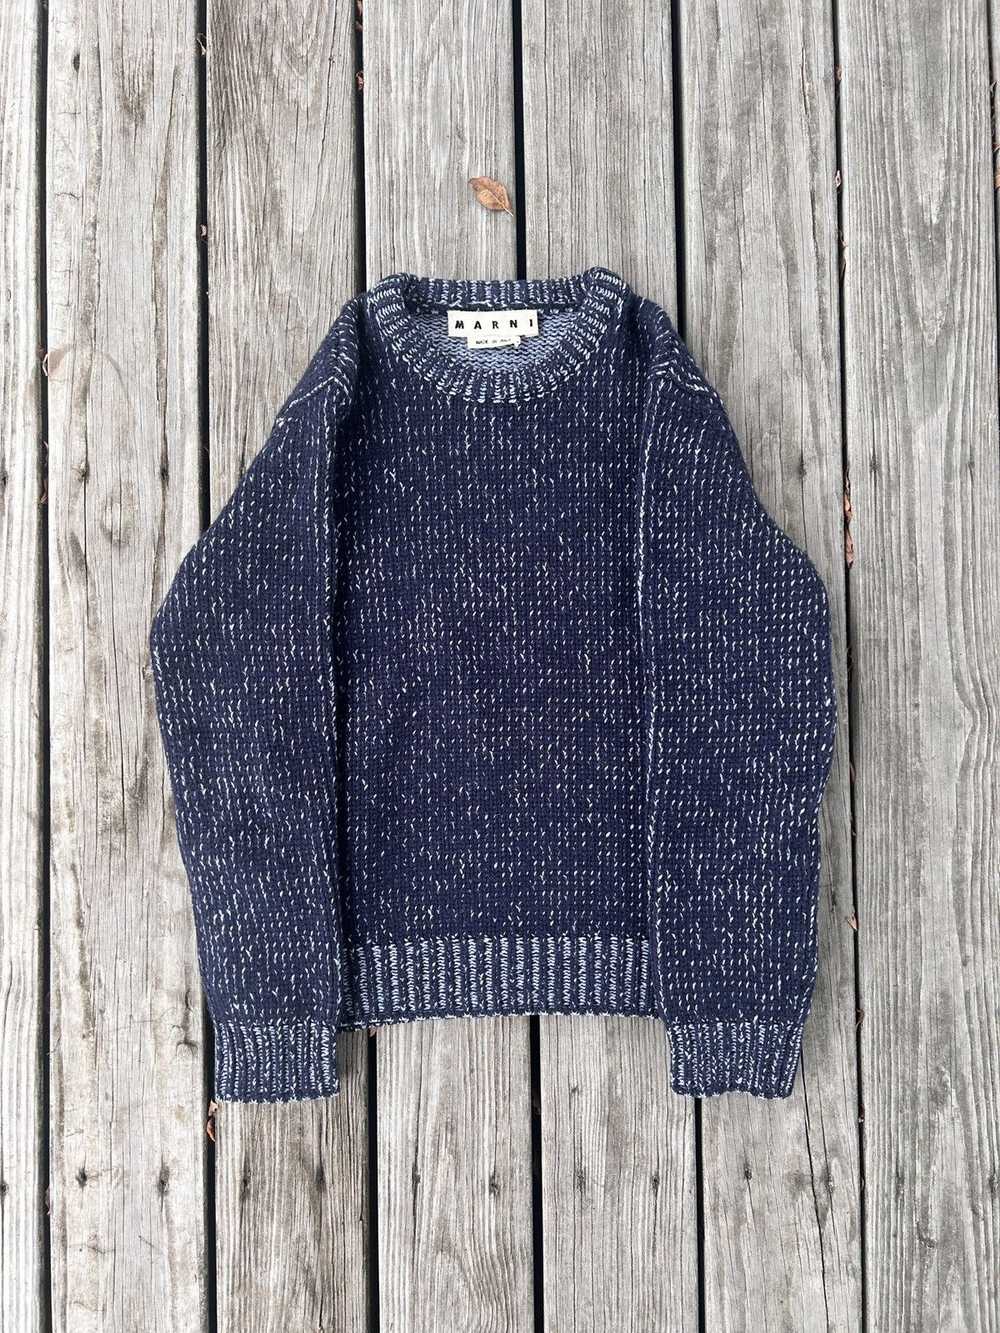 Marni Marni Mohair Sweater - image 2